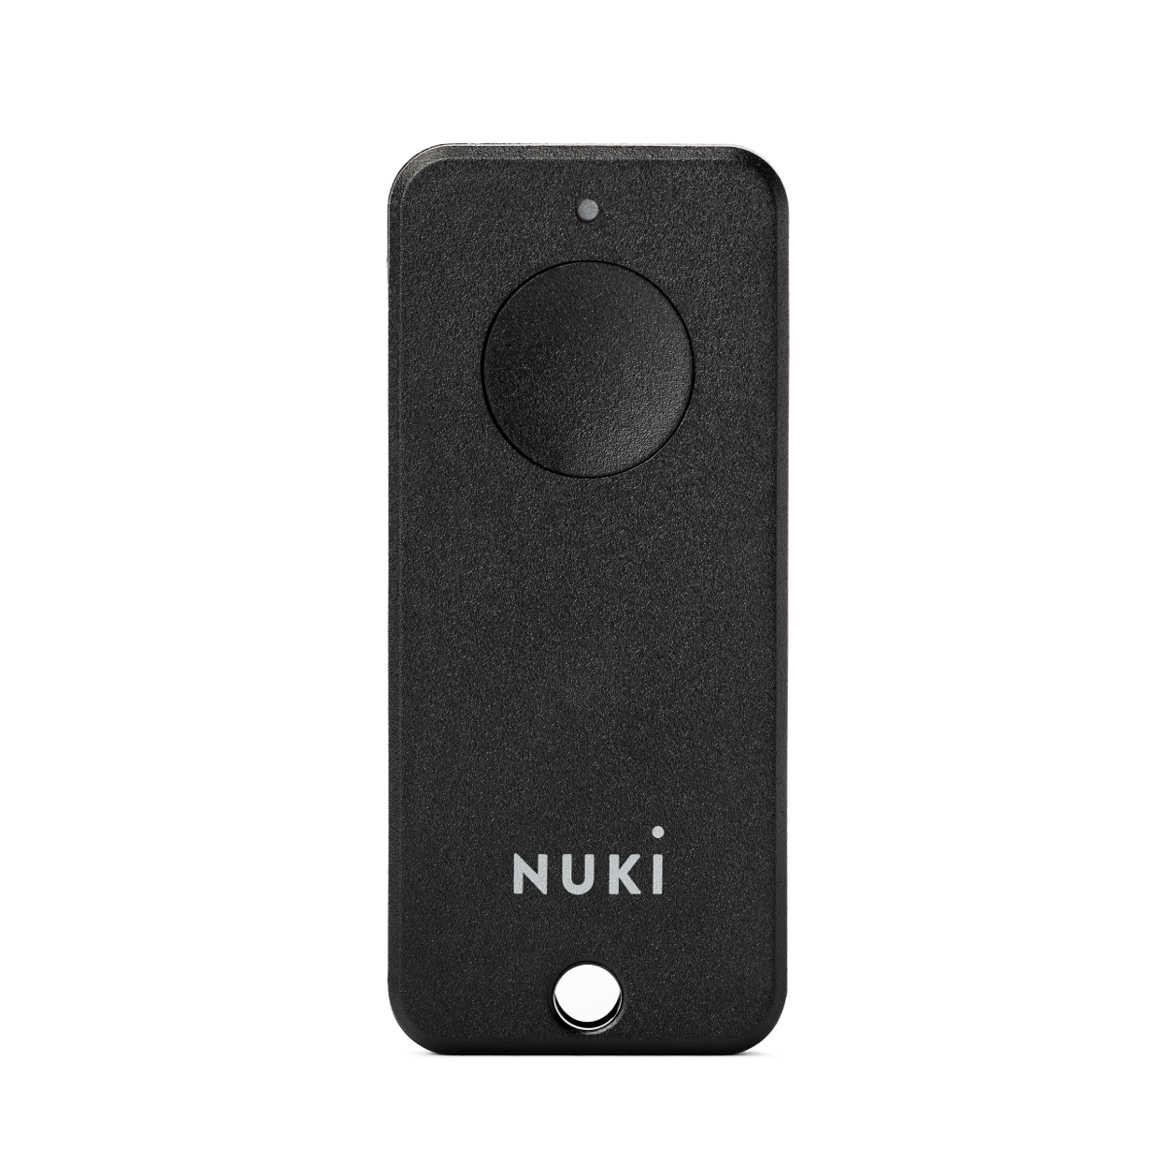 Nuki Bridge - Basisstation zum Nuki Smart Lock